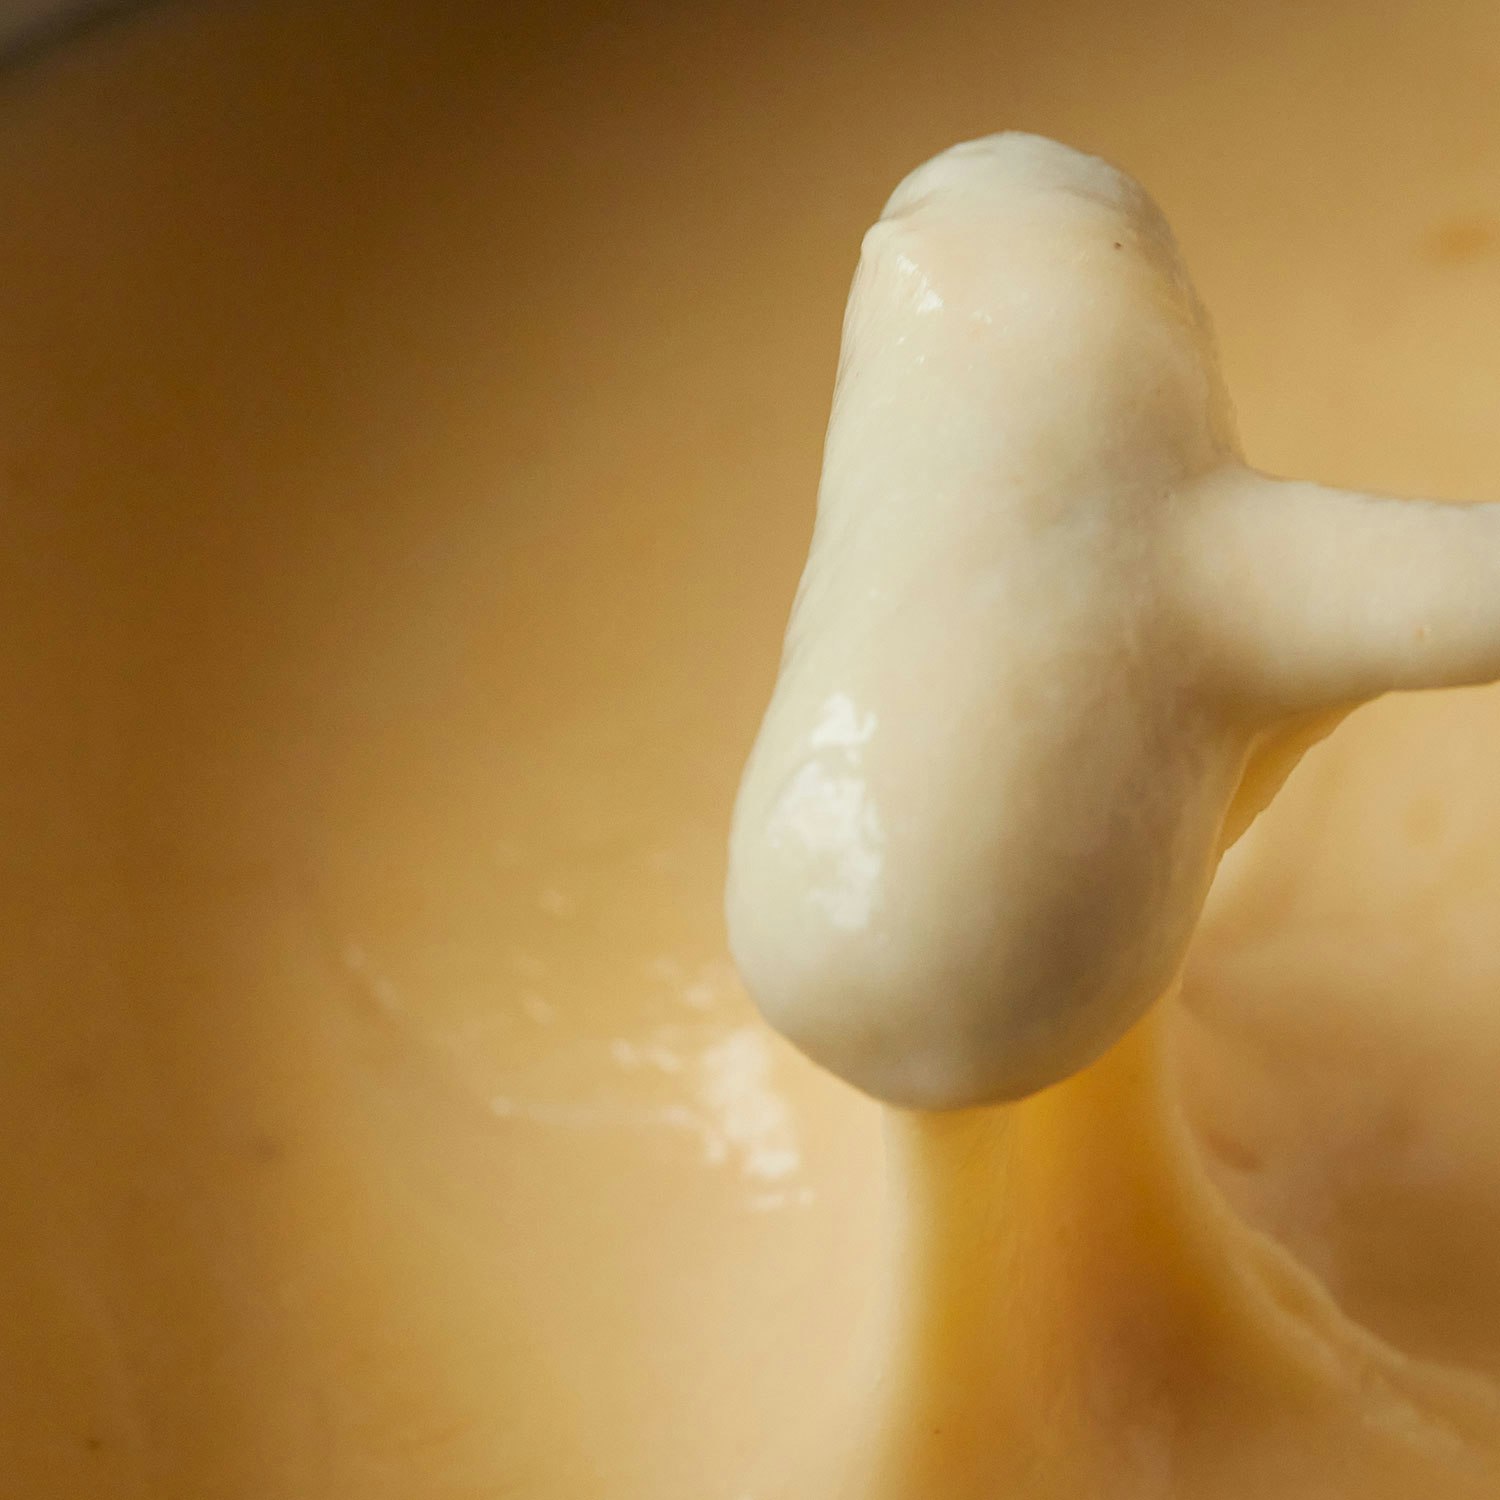 murrays fondue mix cheese